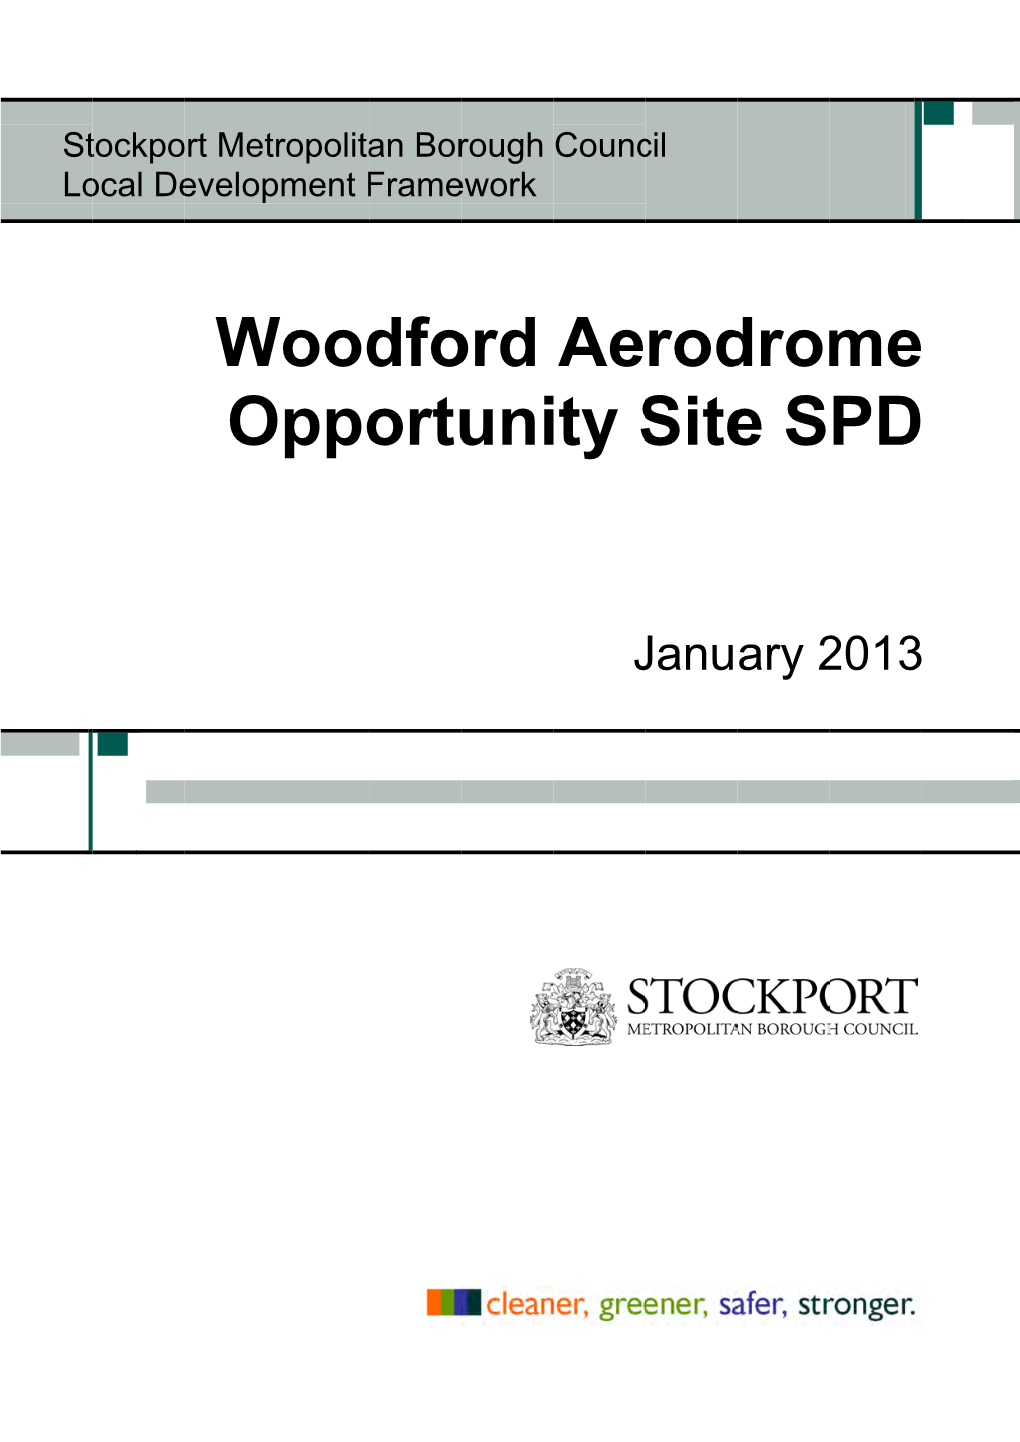 Woodford Aerodrome Opportunity Site SPD